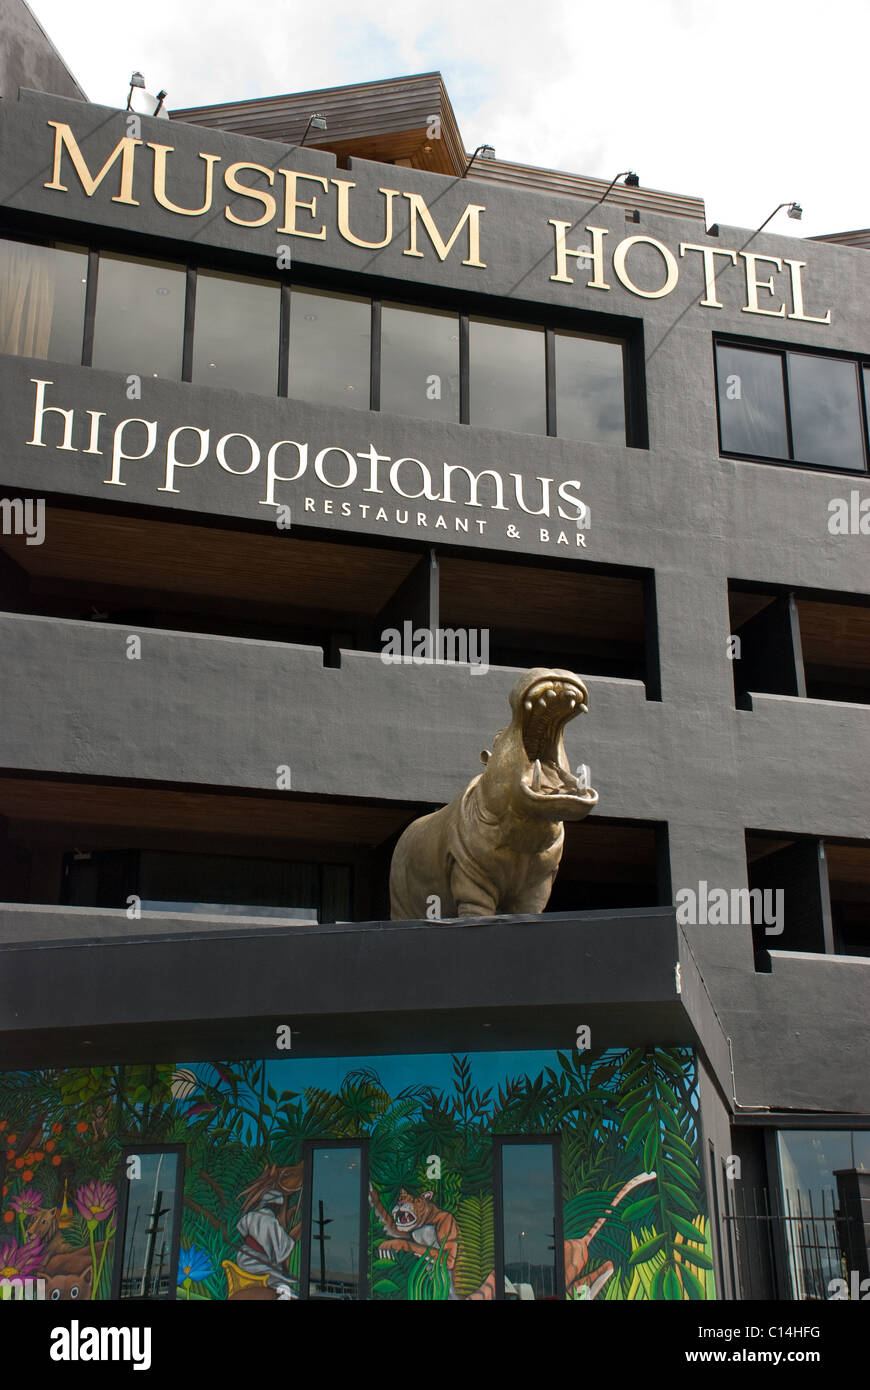 Museum Hotel & Hippopotamus Restaurant Wellington, New Zealand. Stock Photo